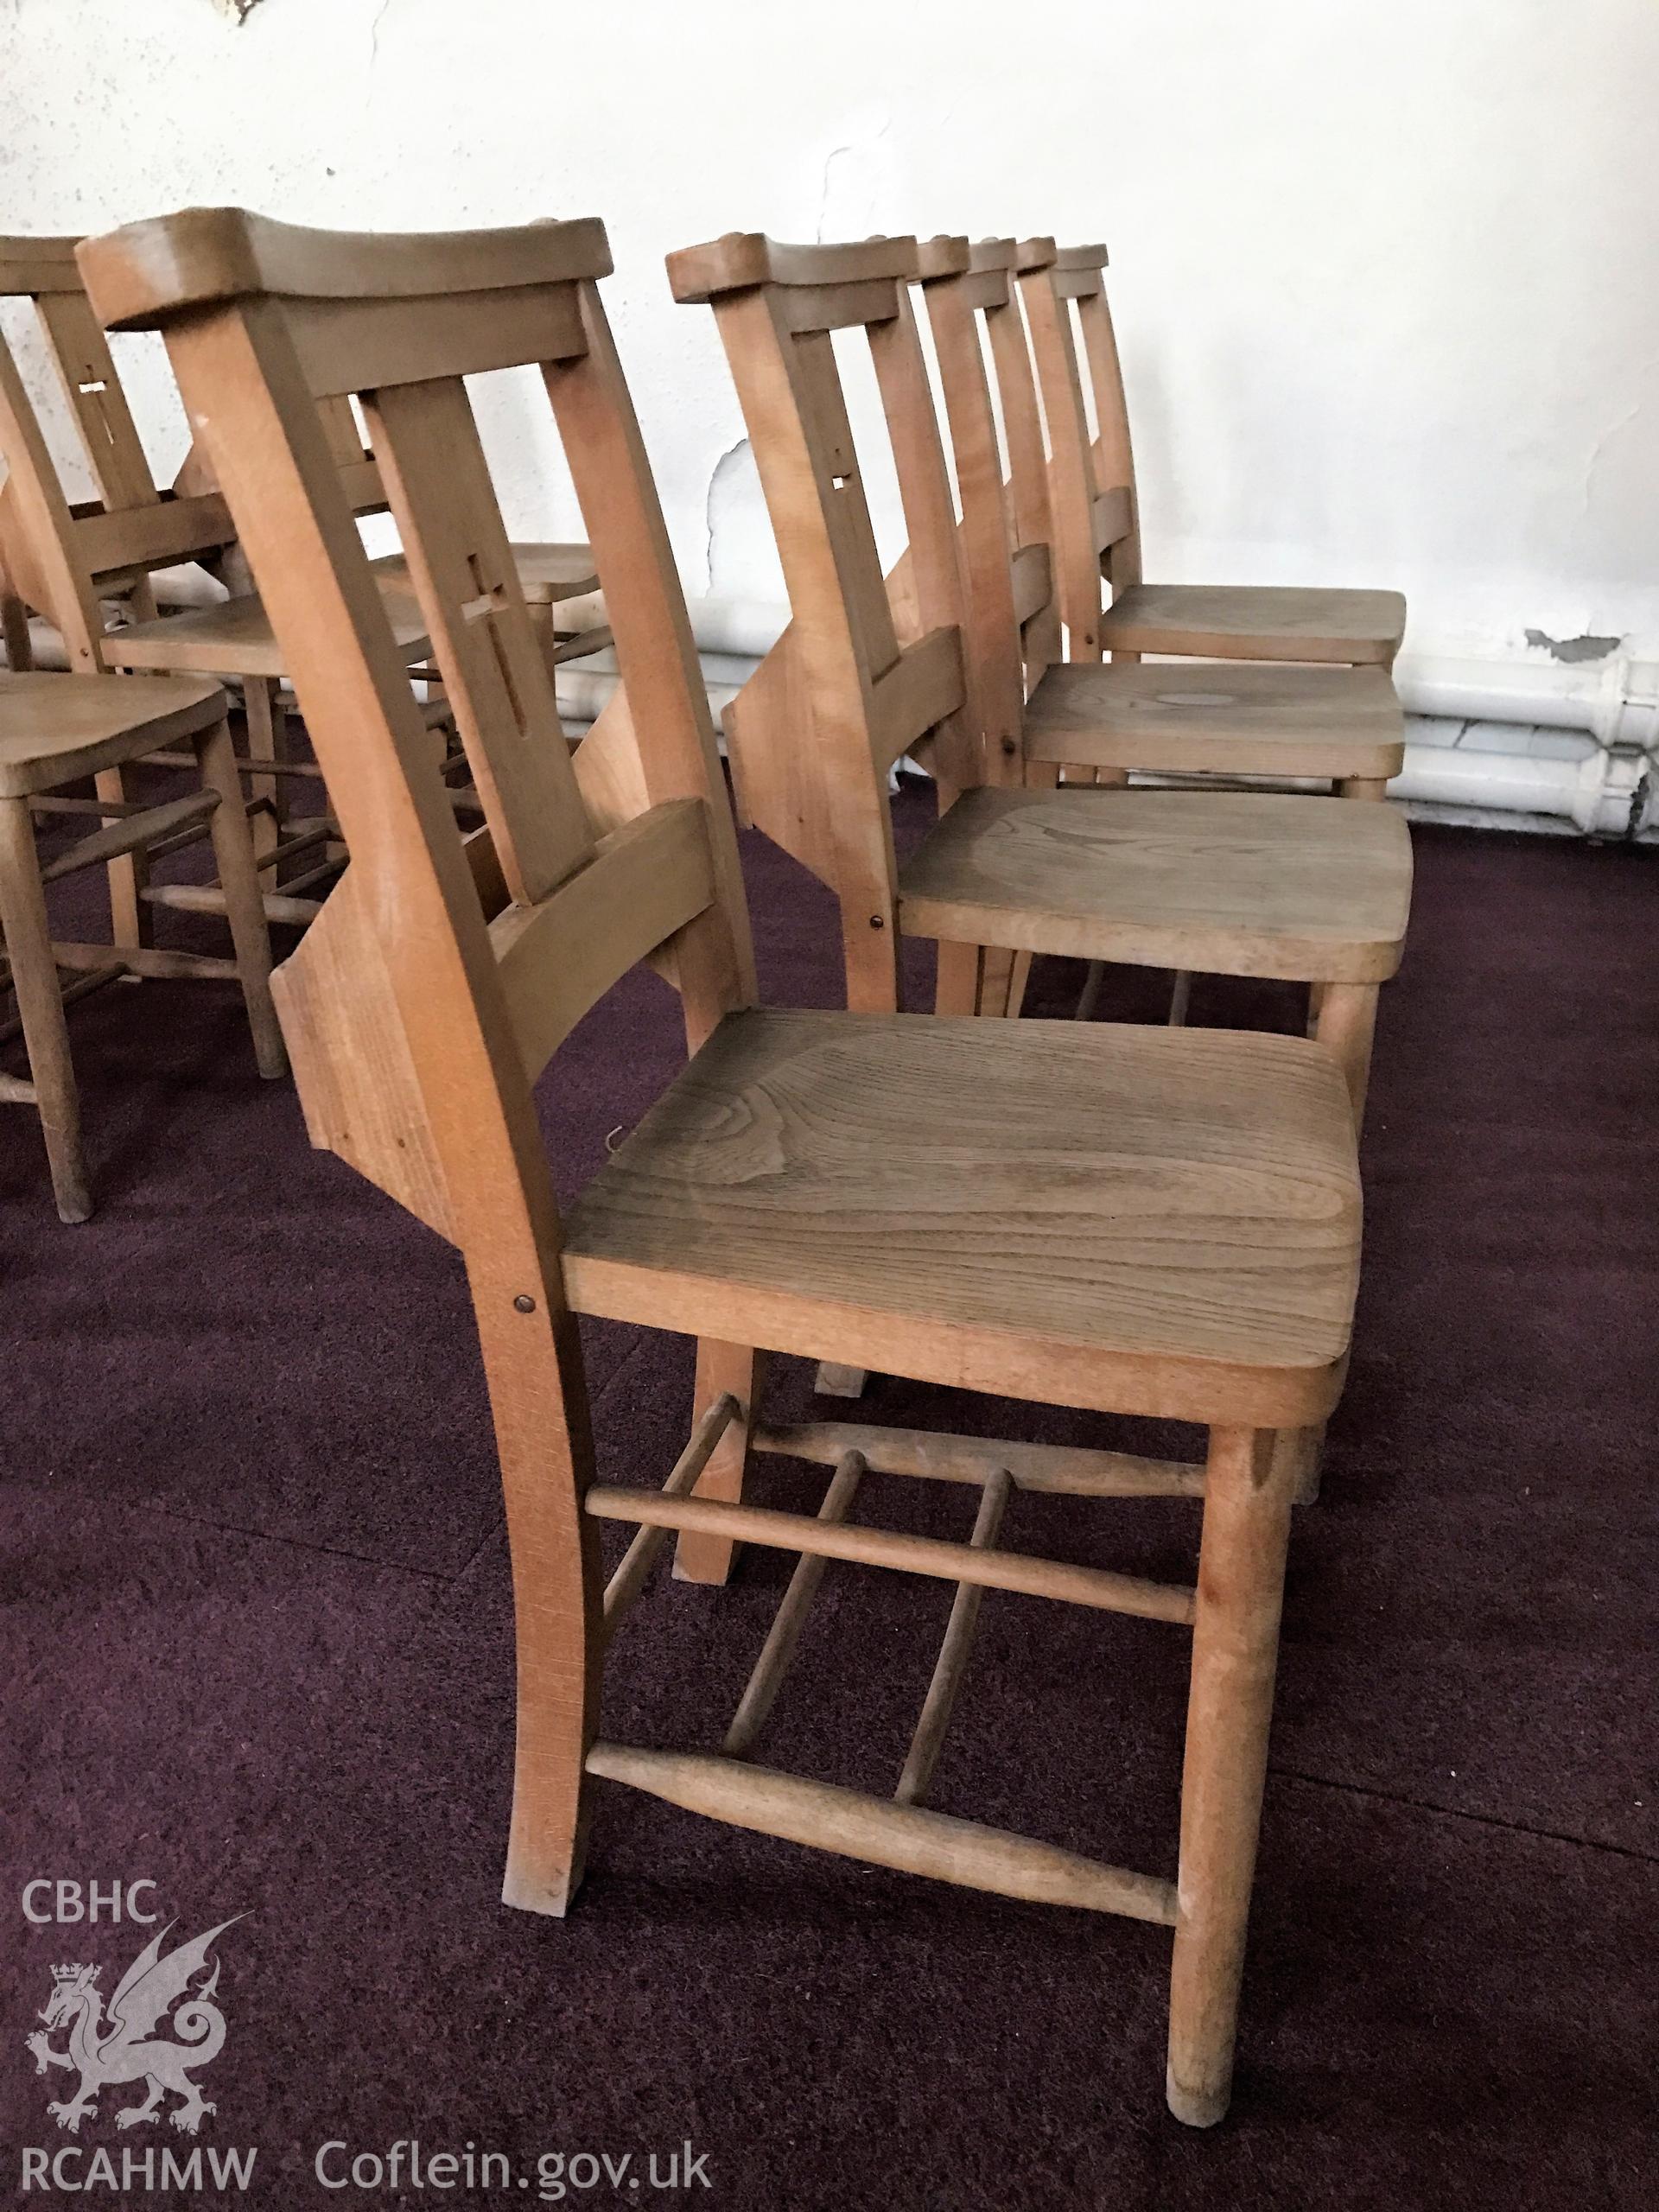 Colour photo showing wooden seating at St Paul's Church, Grangetown, taken by Revd David T. Morris, 2018.